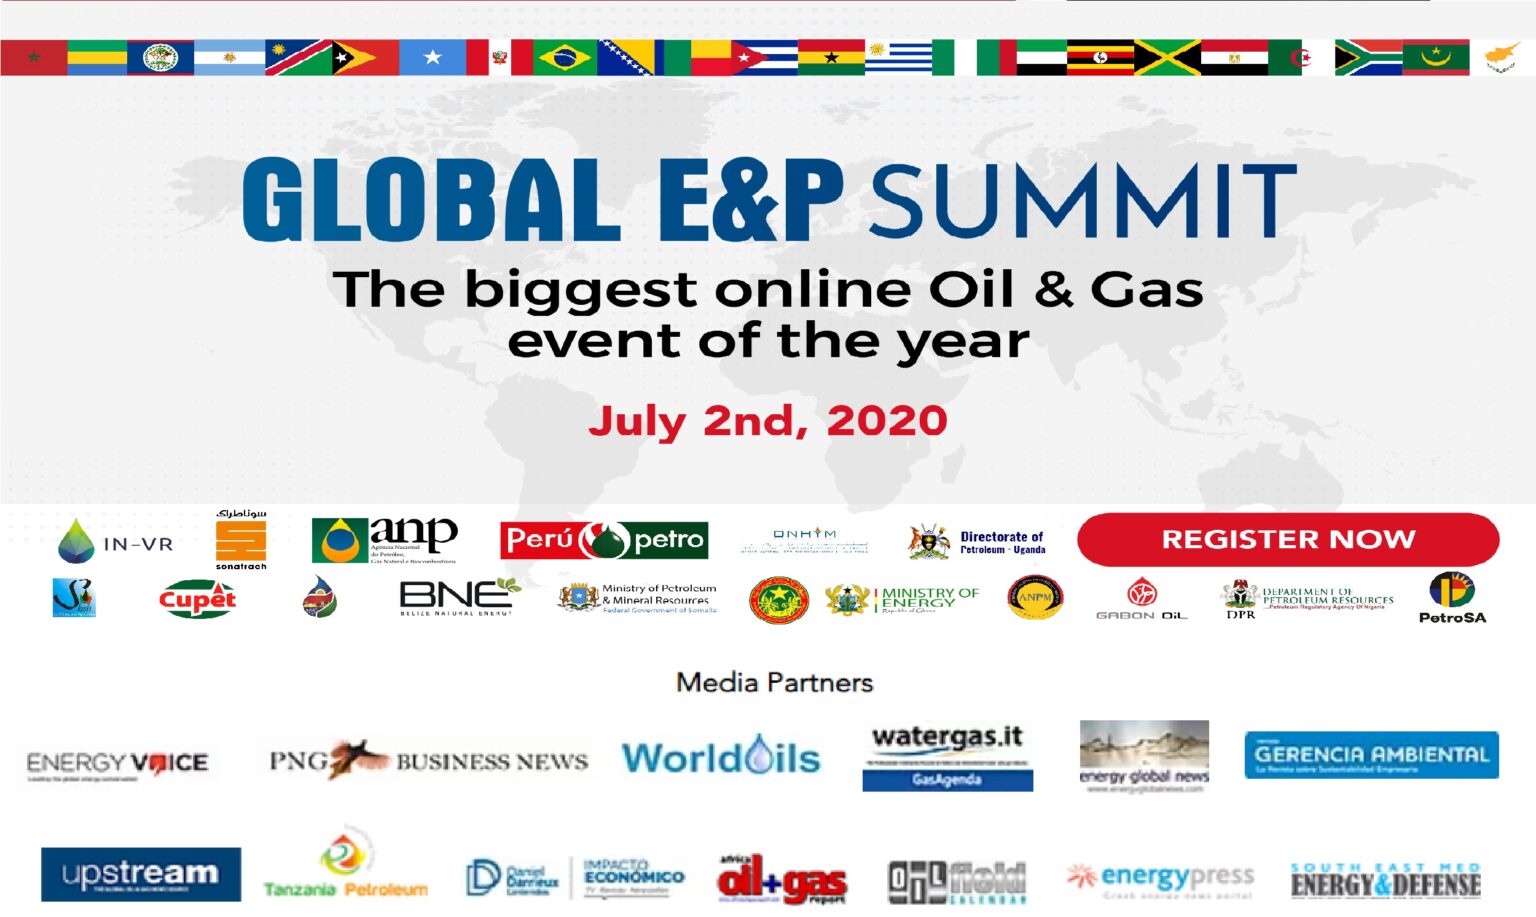 Global E&P National regulators meet with IOCs online SEMED ENERGY